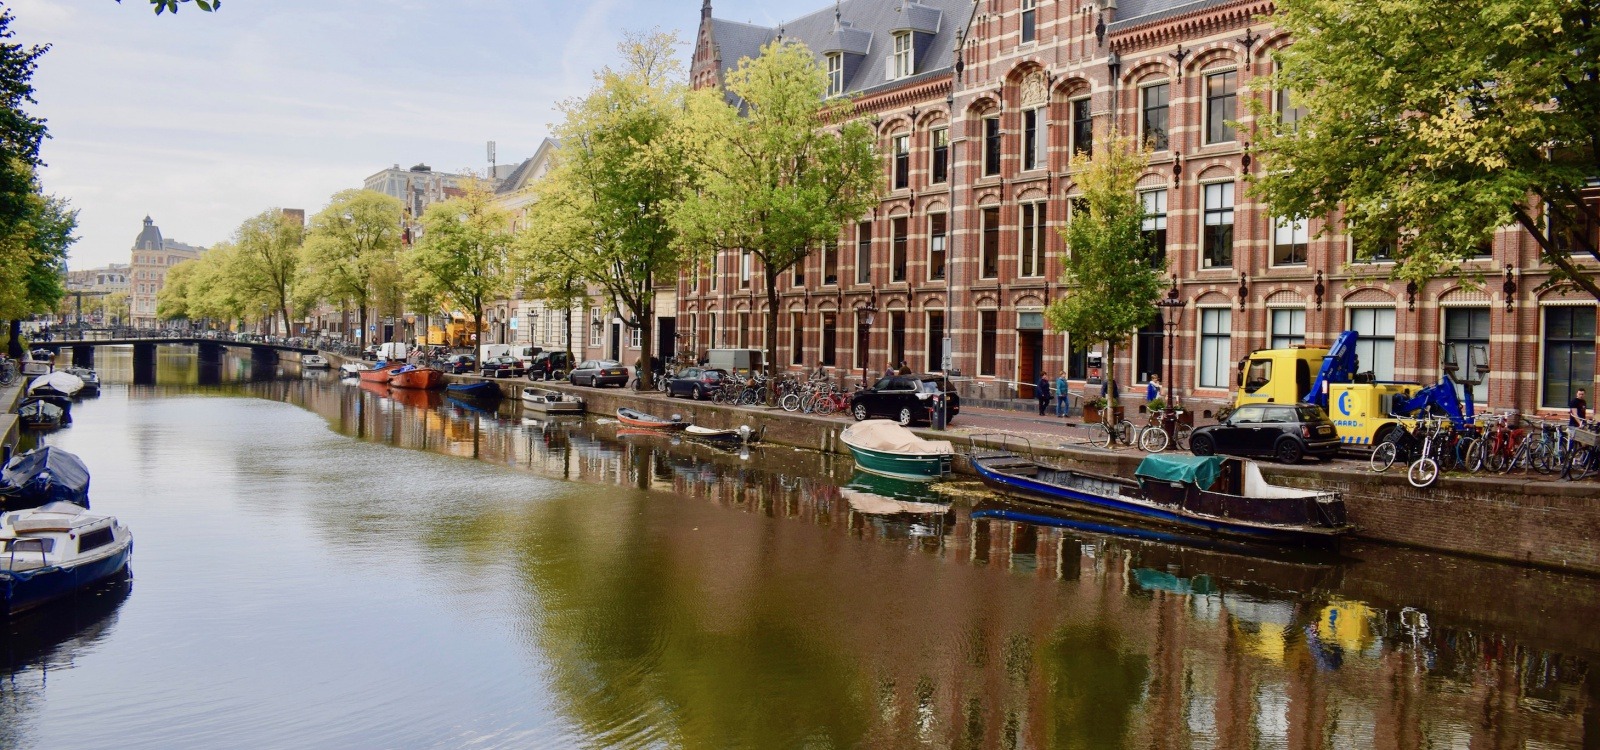 kloveniersburgwal canal amsterdam